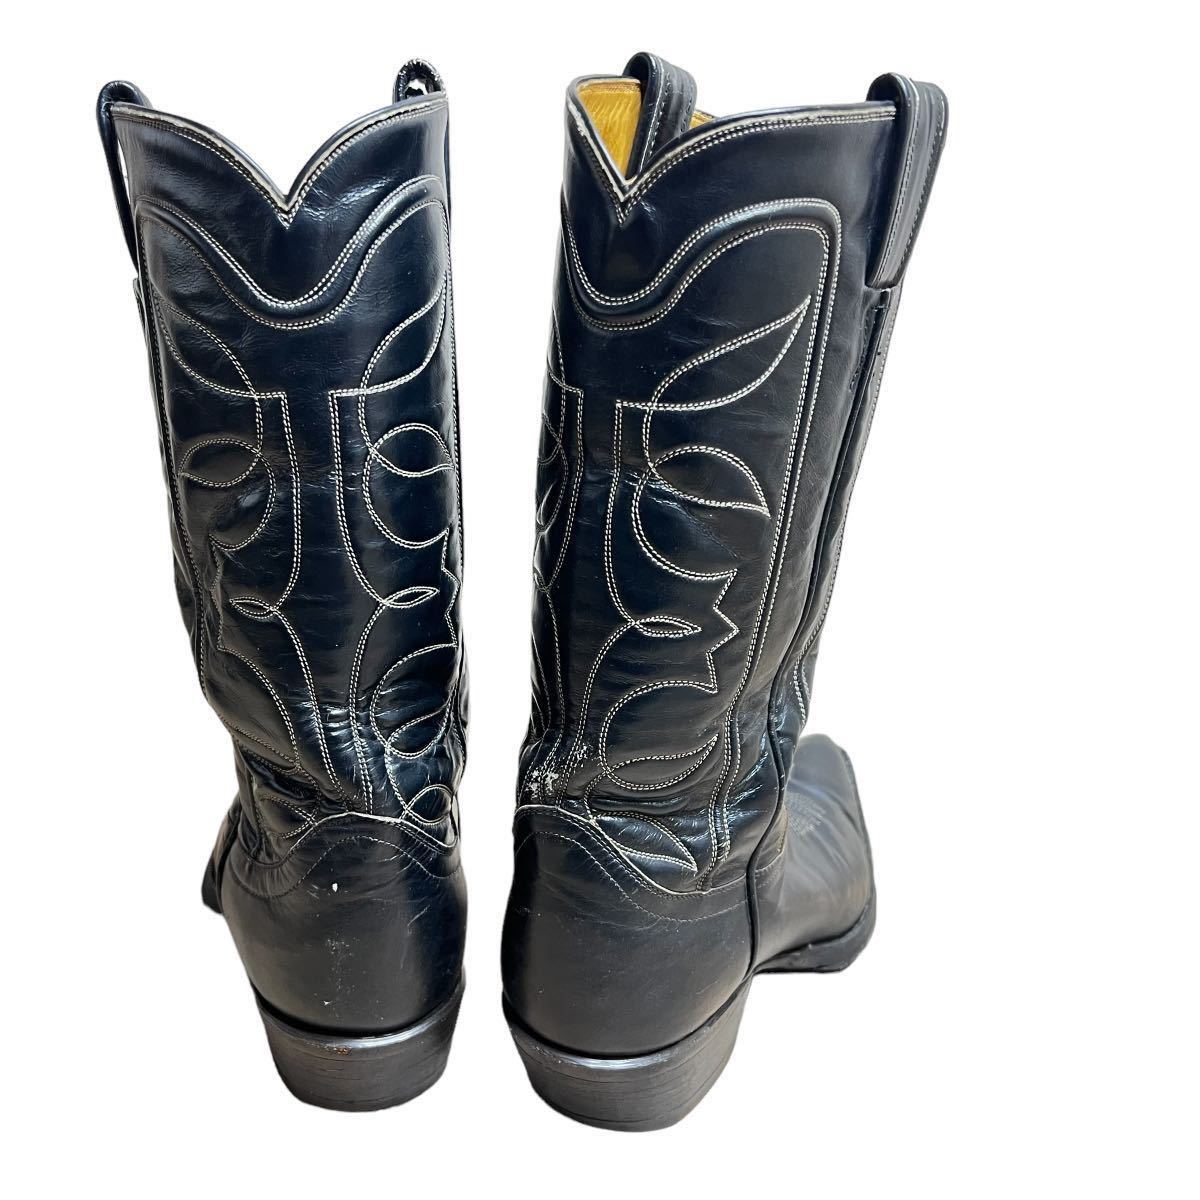  prompt decision *Tony Lama*7 1/2D western boots Tony Lama black black original leather real leather kau Boy boots 